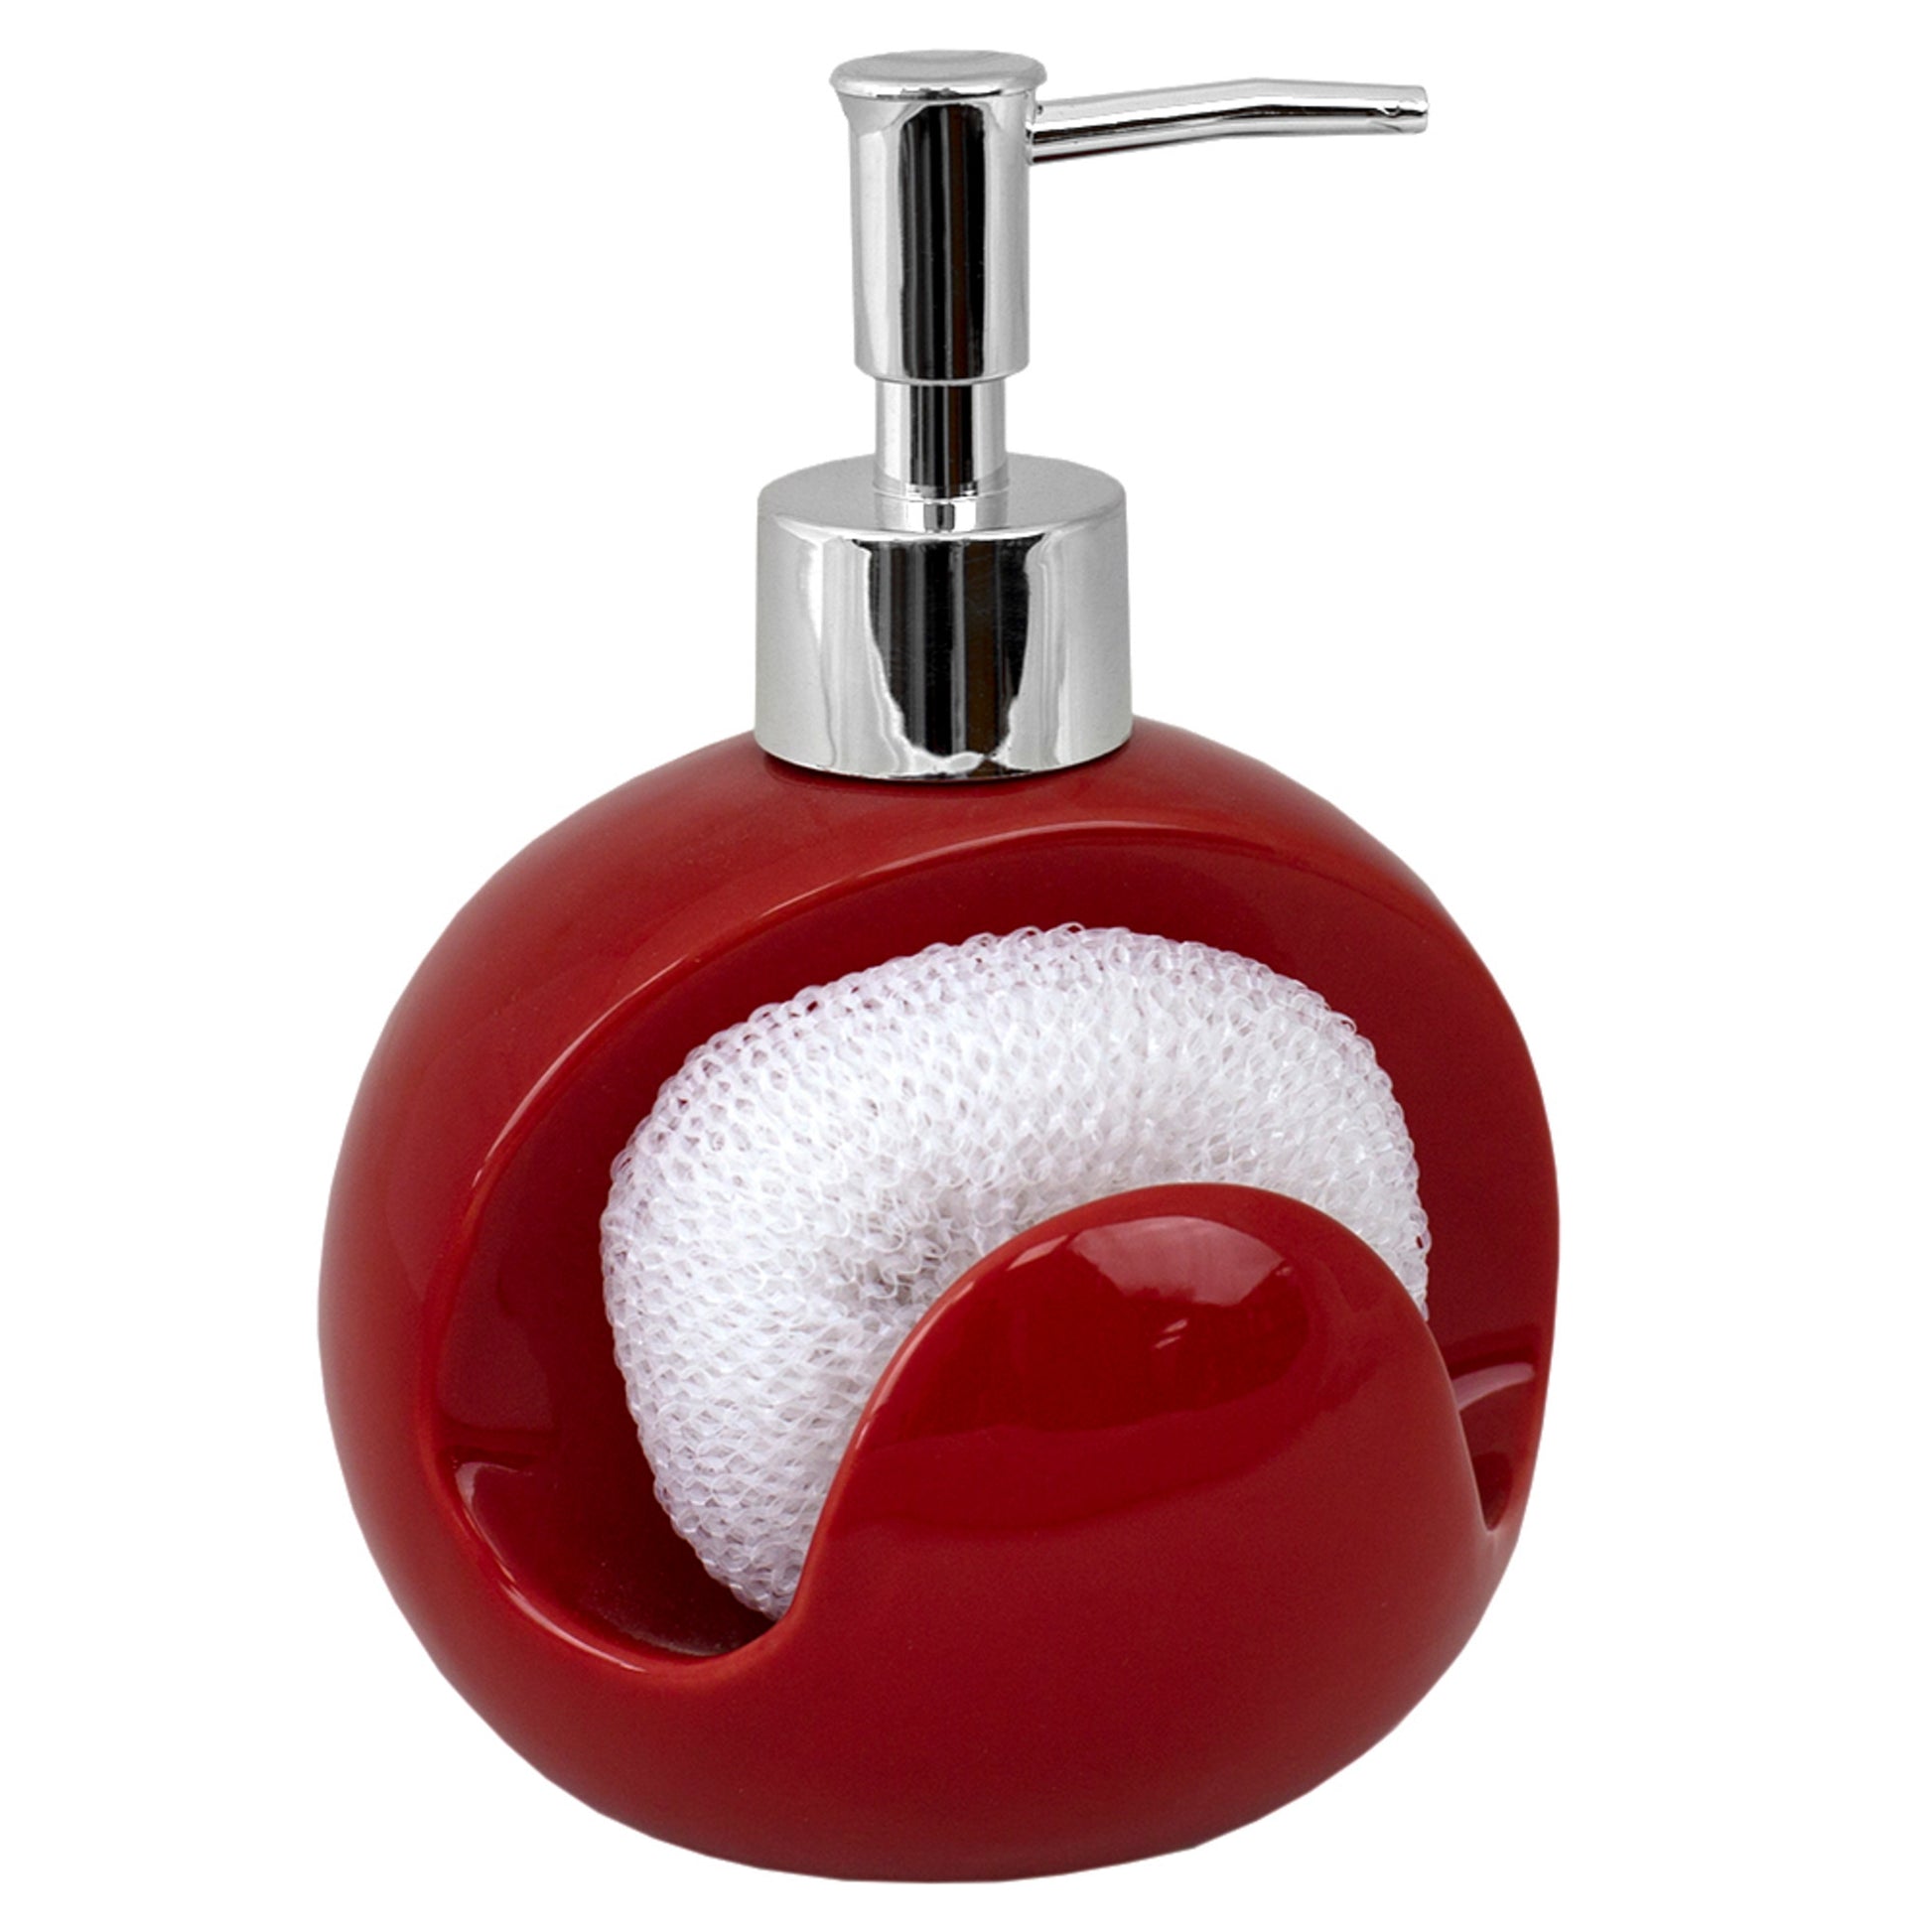 Home Basics Round 8 oz. Ceramic Soap Dispenser with Sponge - Red